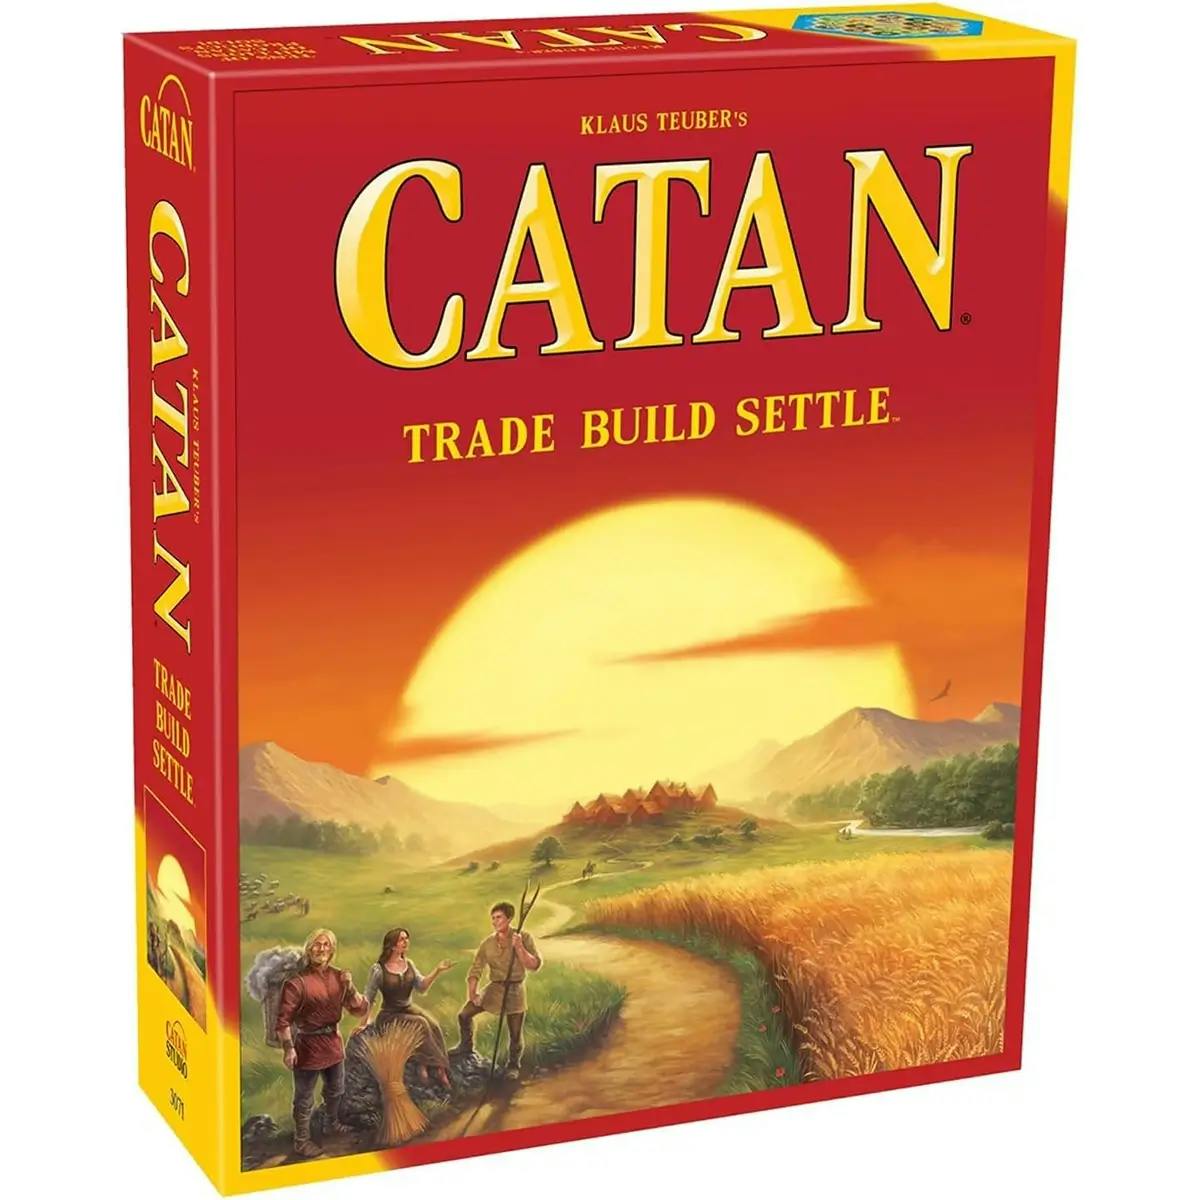 Catan board game.